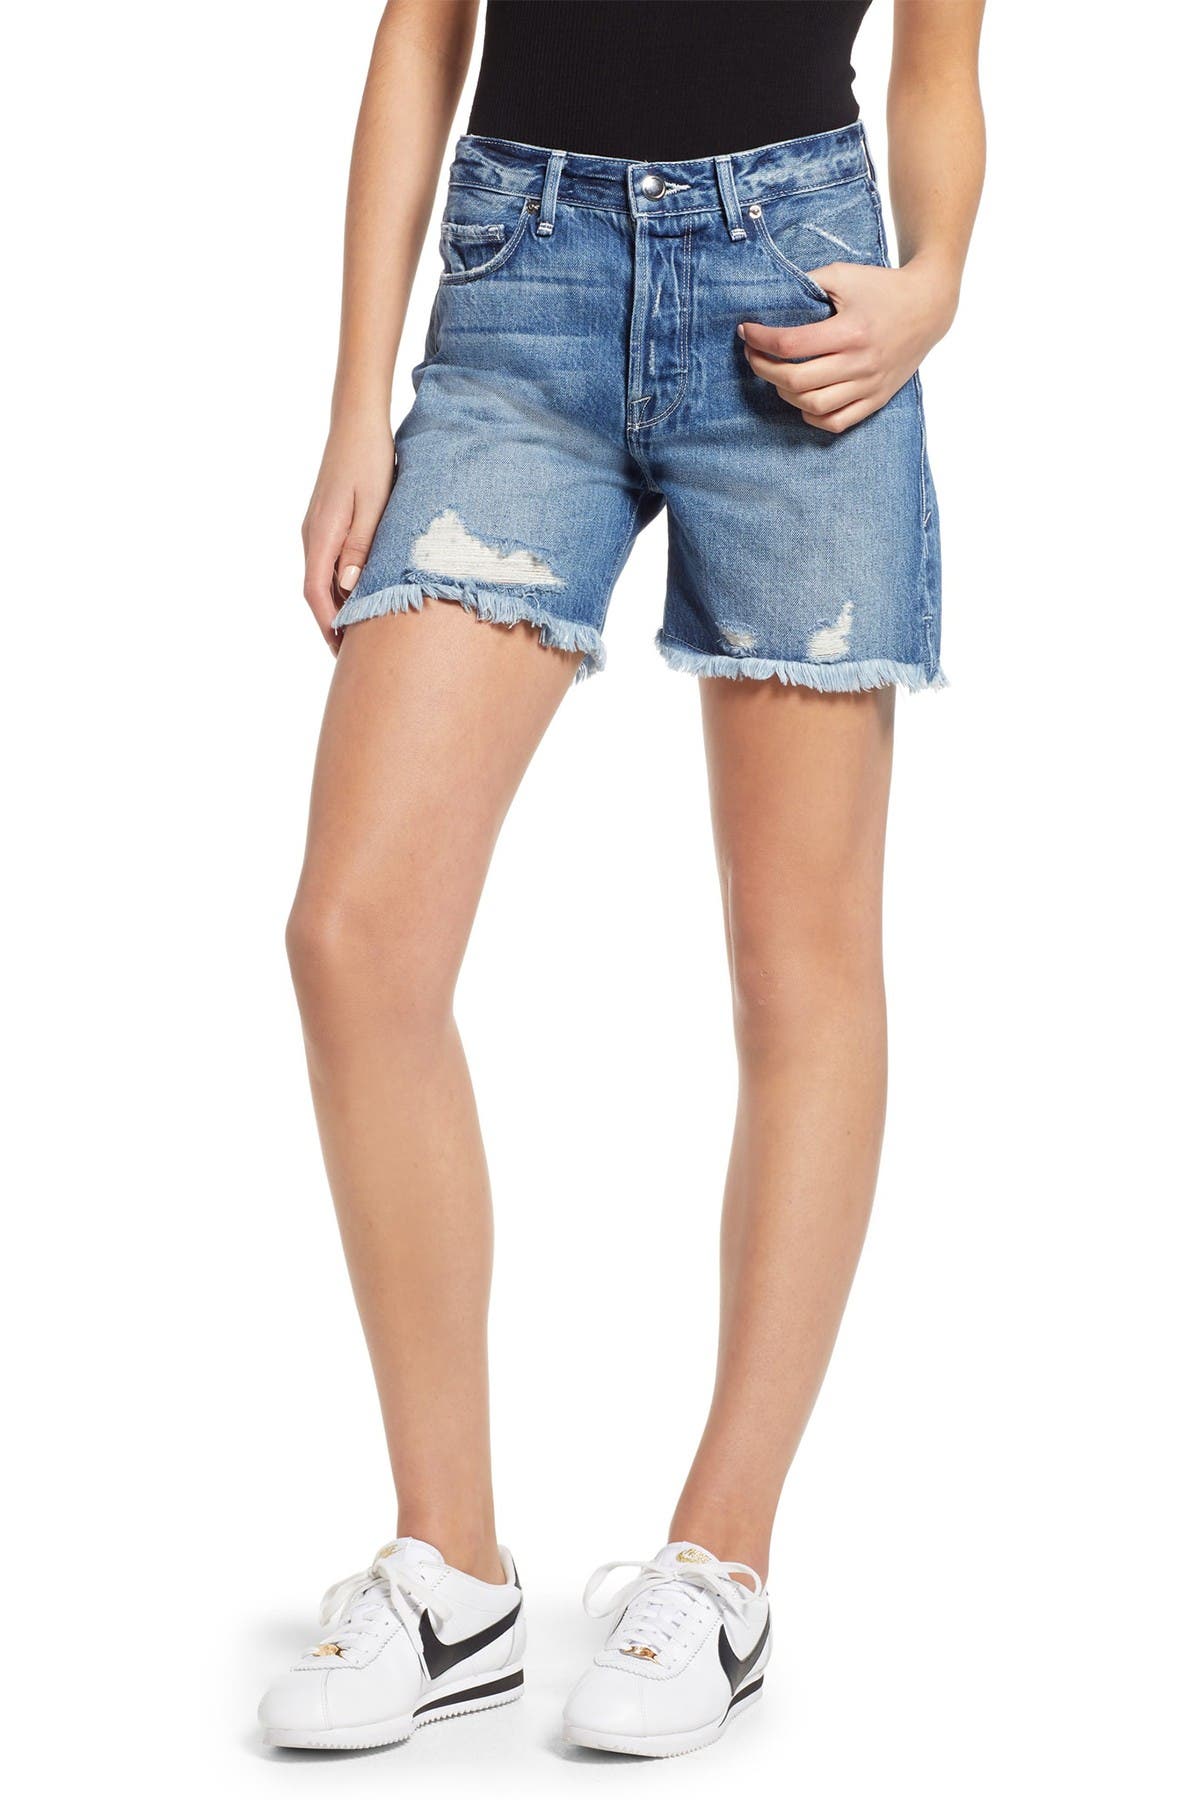 good american jean shorts